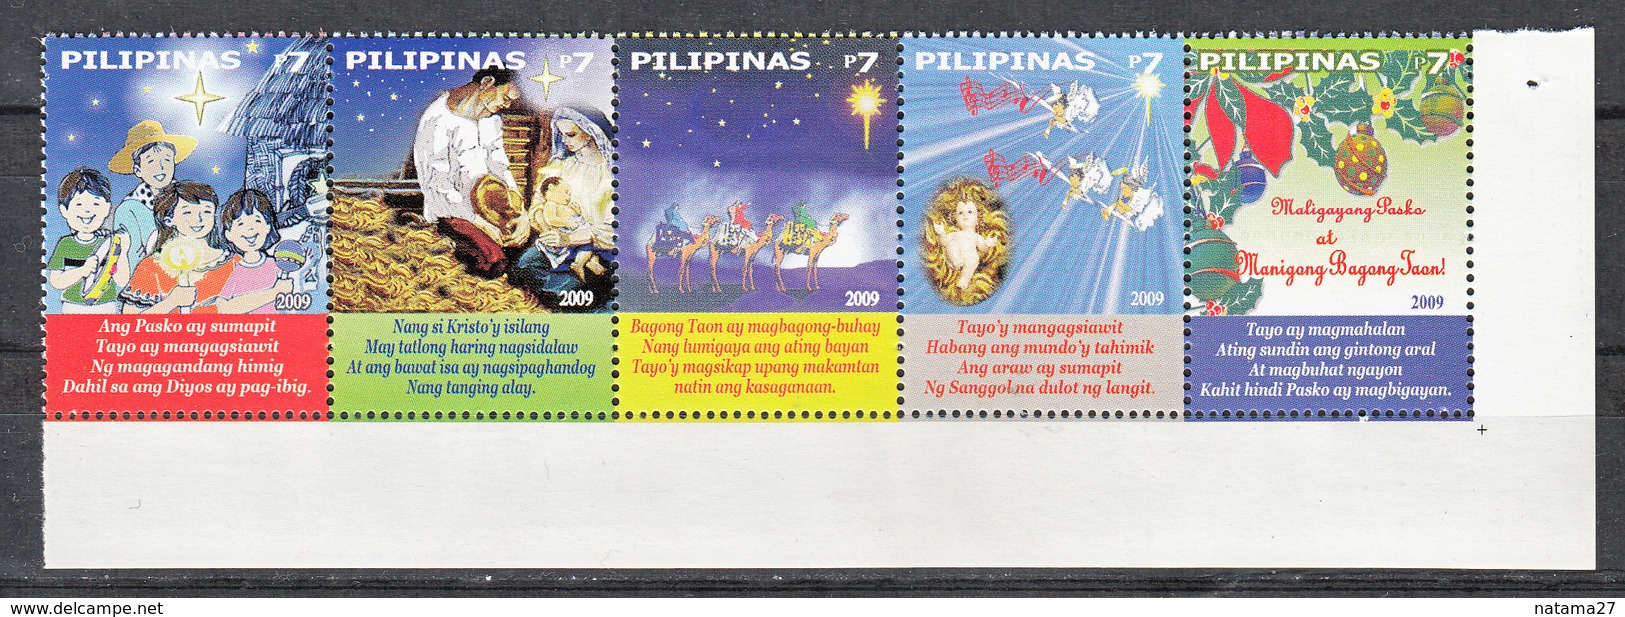 Filippine Philippines Philippinen Filipinas 2009 Christmas Carols In Pilipino 7p X 5 - Se-tenant Strips Of Five - MNH** - Filippine